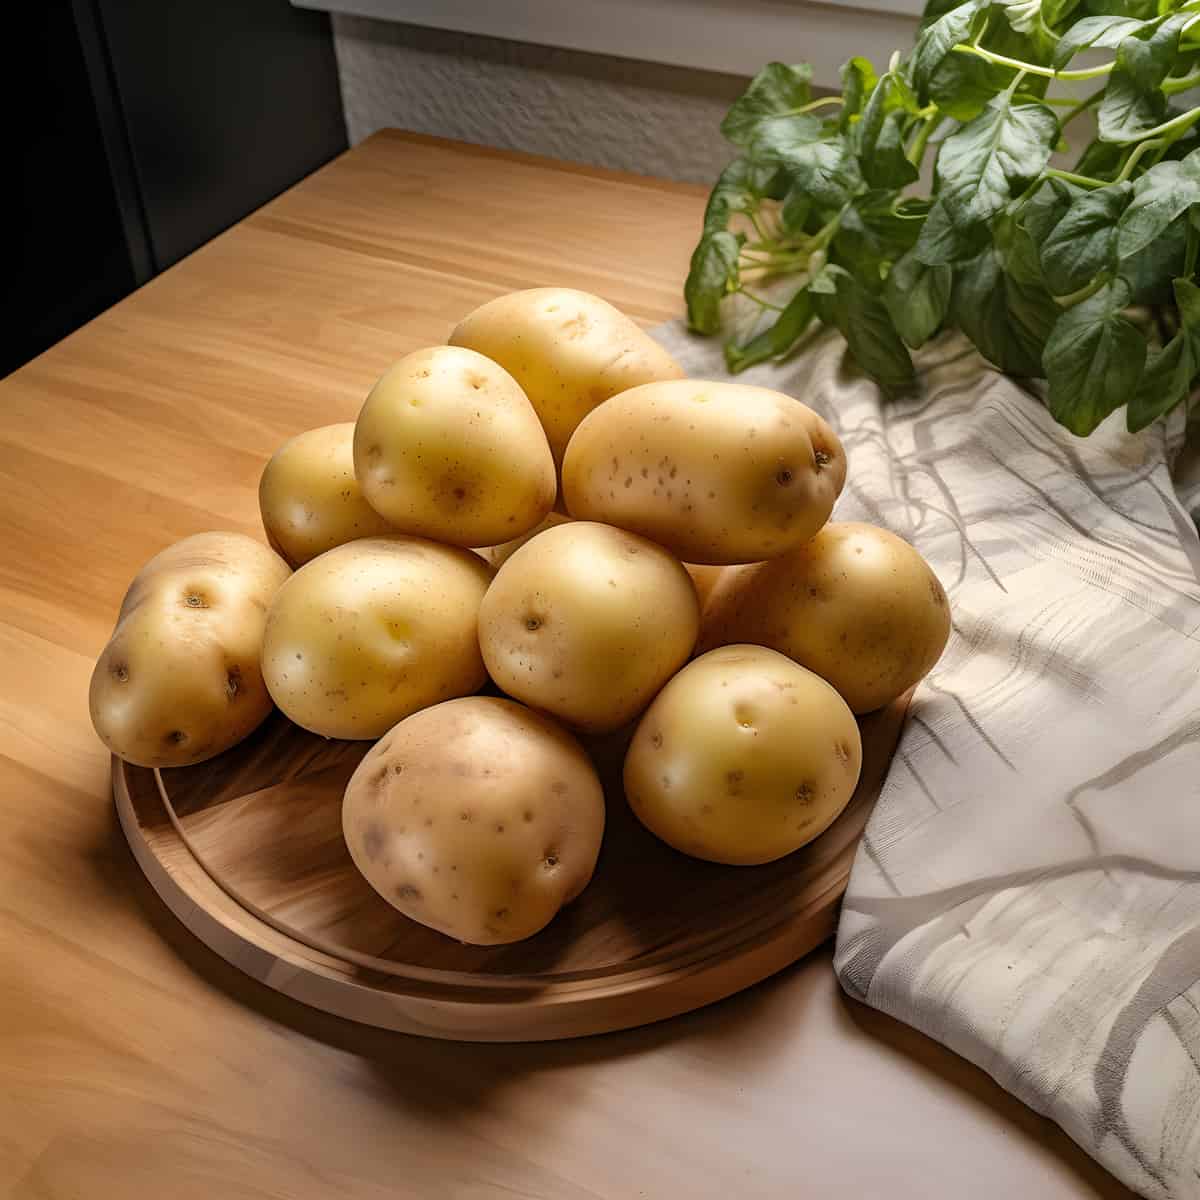 Opperdoezer Ronde Potatoes on a kitchen counter